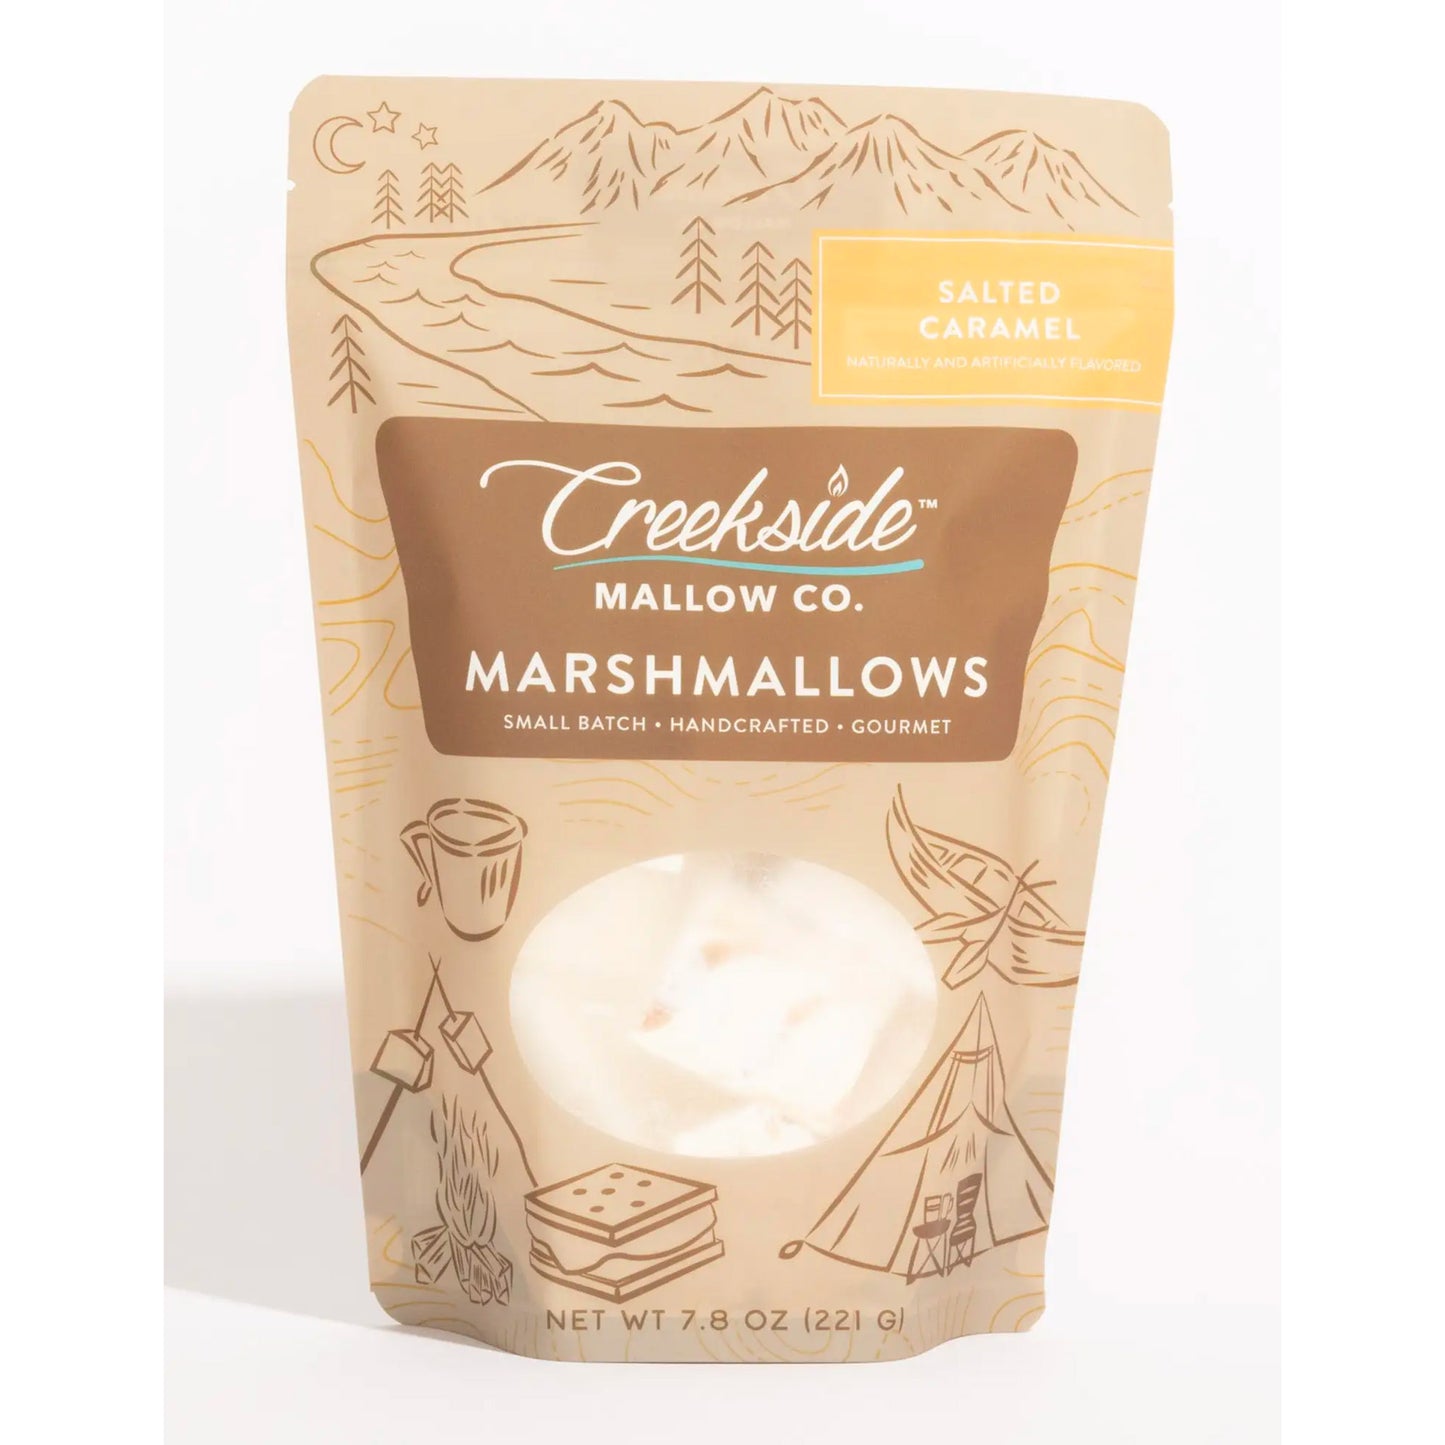 Salted Caramel Marshmallow